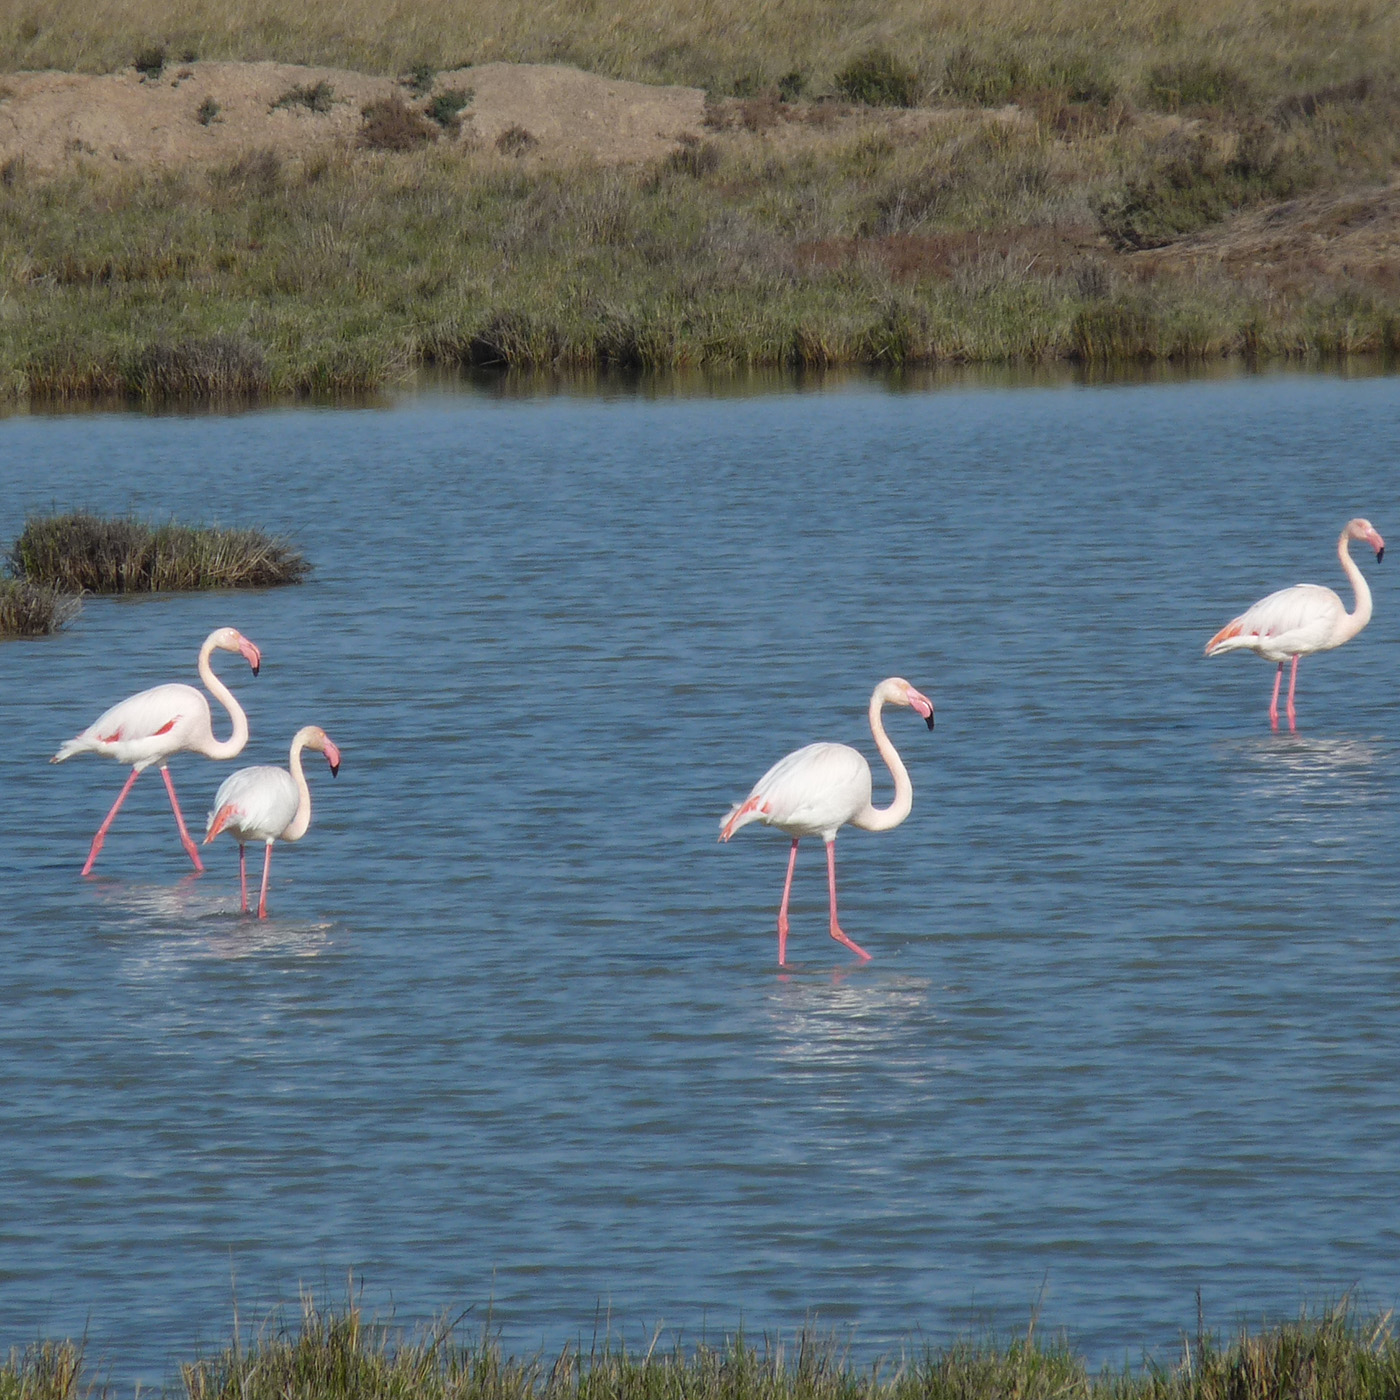 4x4 route through the marshes of the Guadalquivir - Doñana Natural Park 0 - Rutasiete